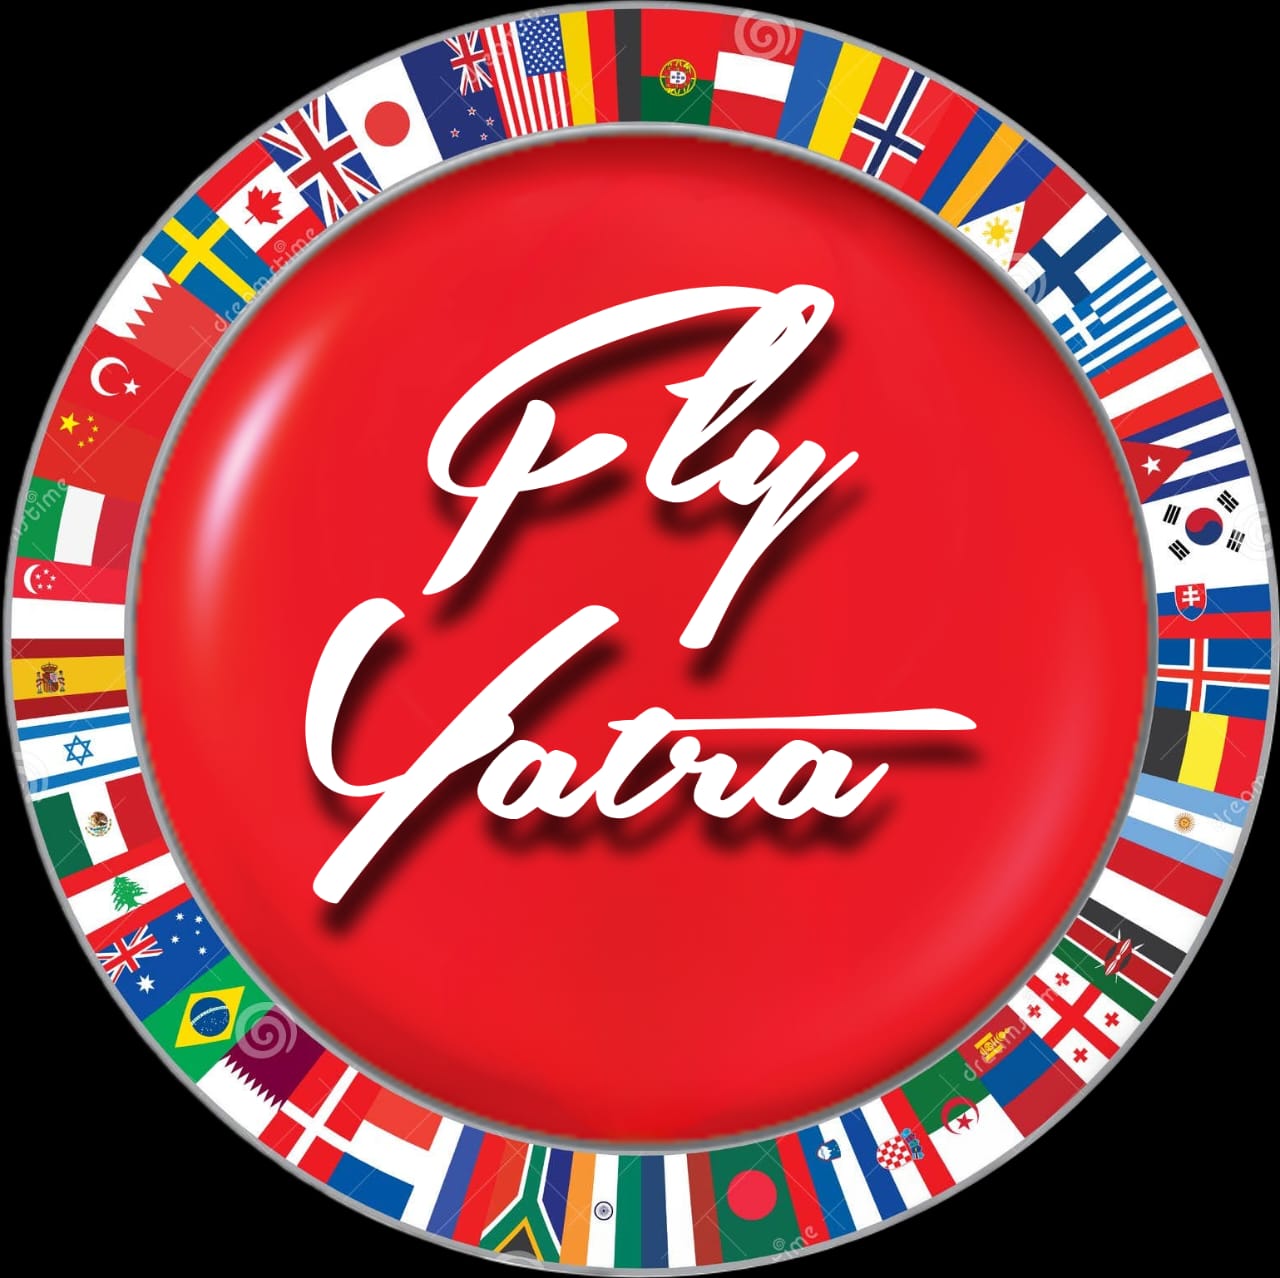 Fly Yatra